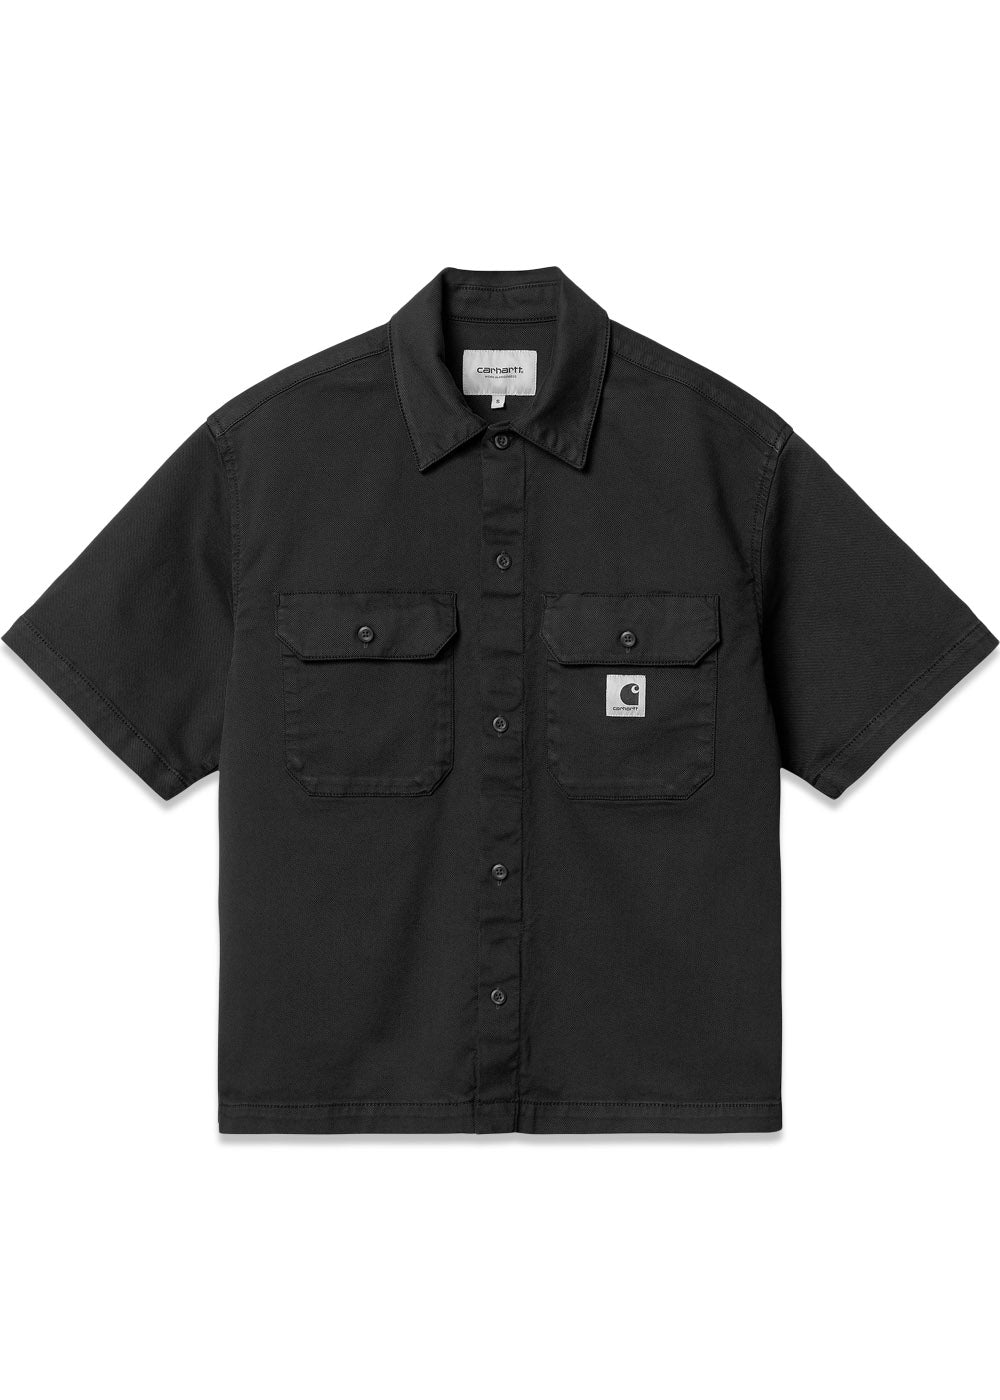 W S/S Craft Shirt - Black Rinsed